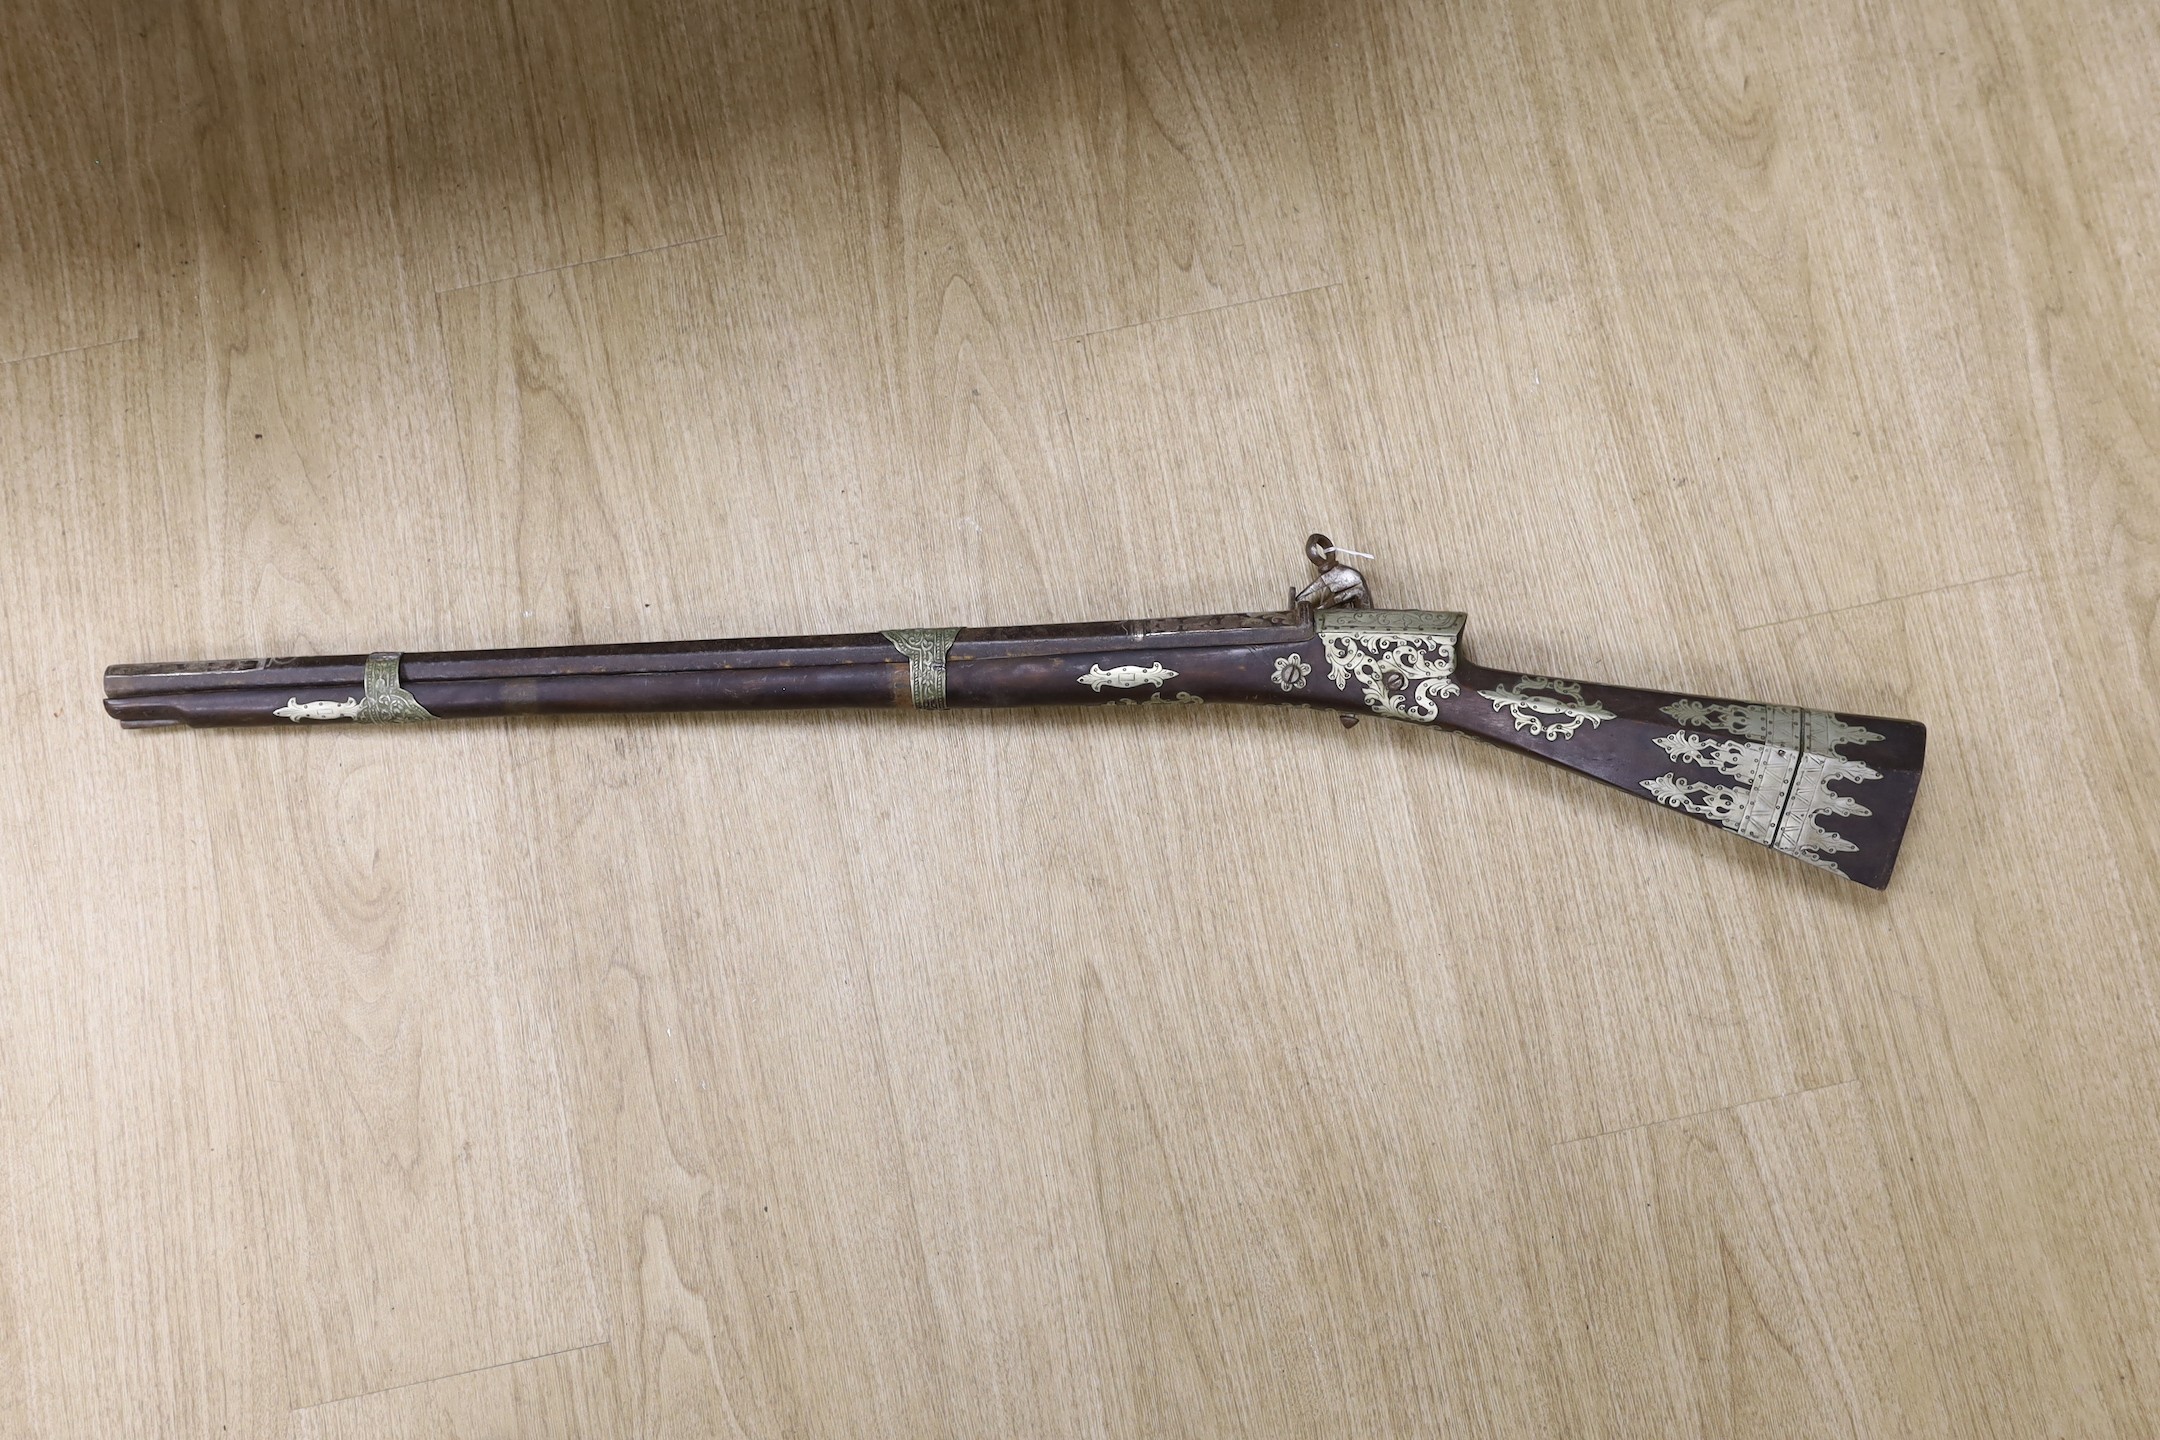 An Eastern antique flintlock musket